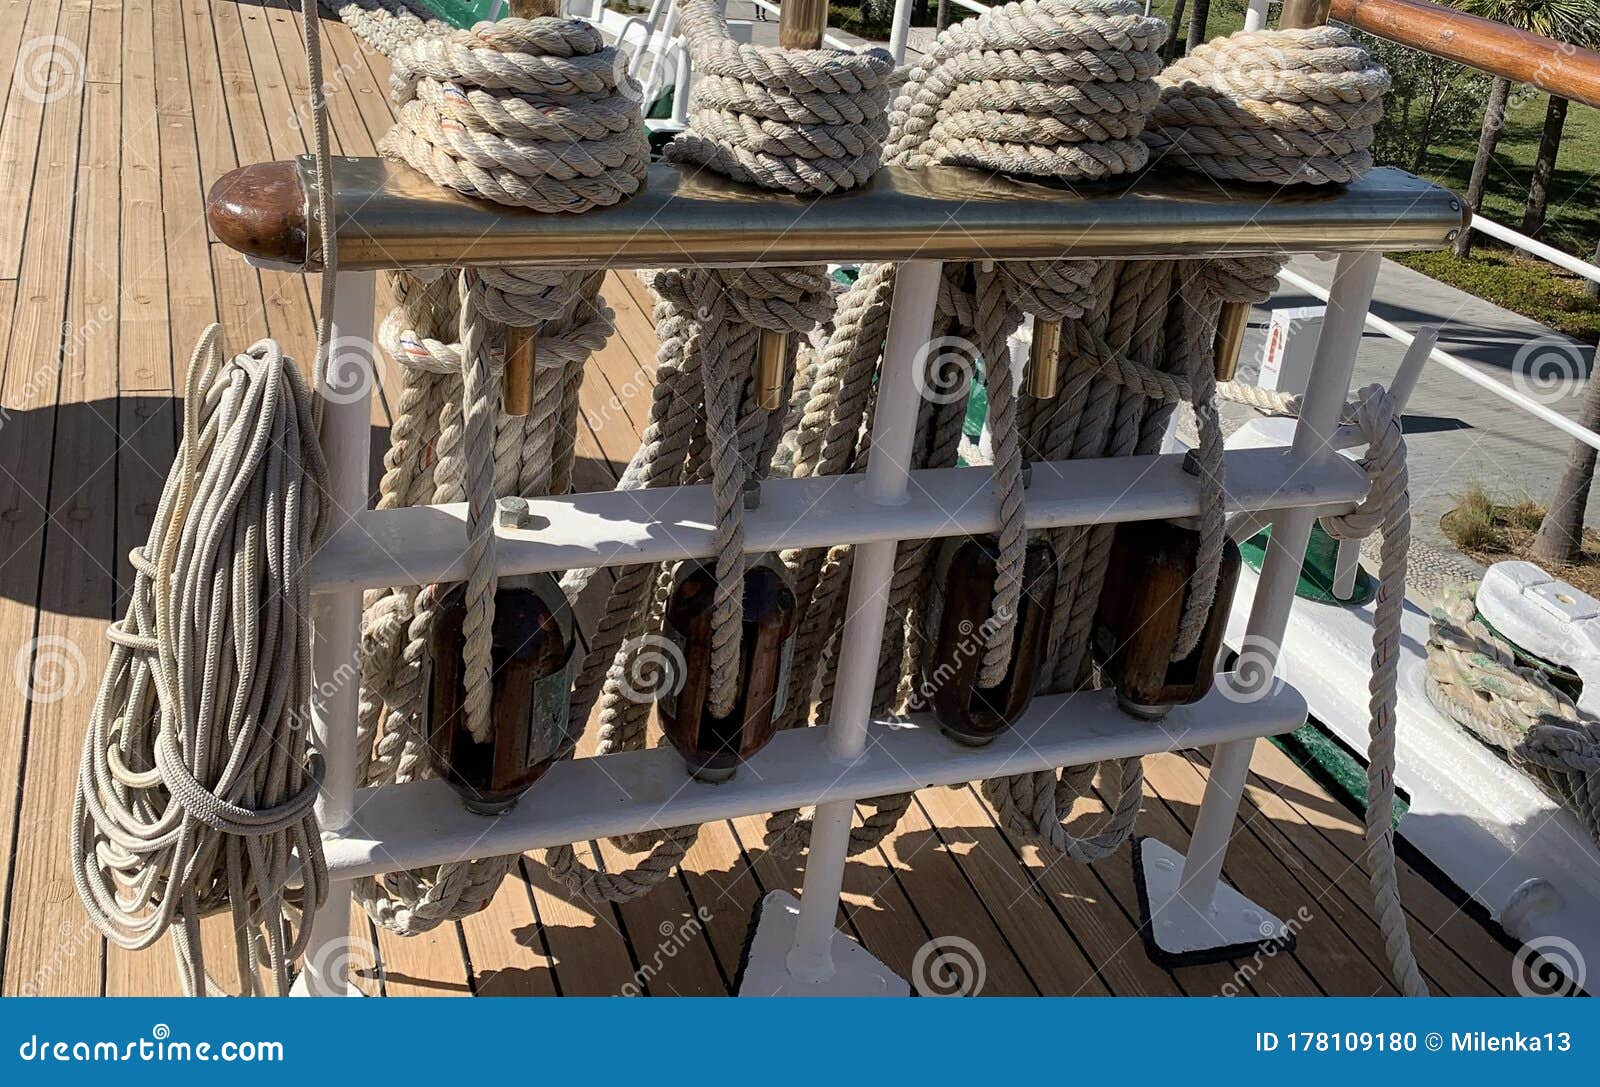 organized ropes